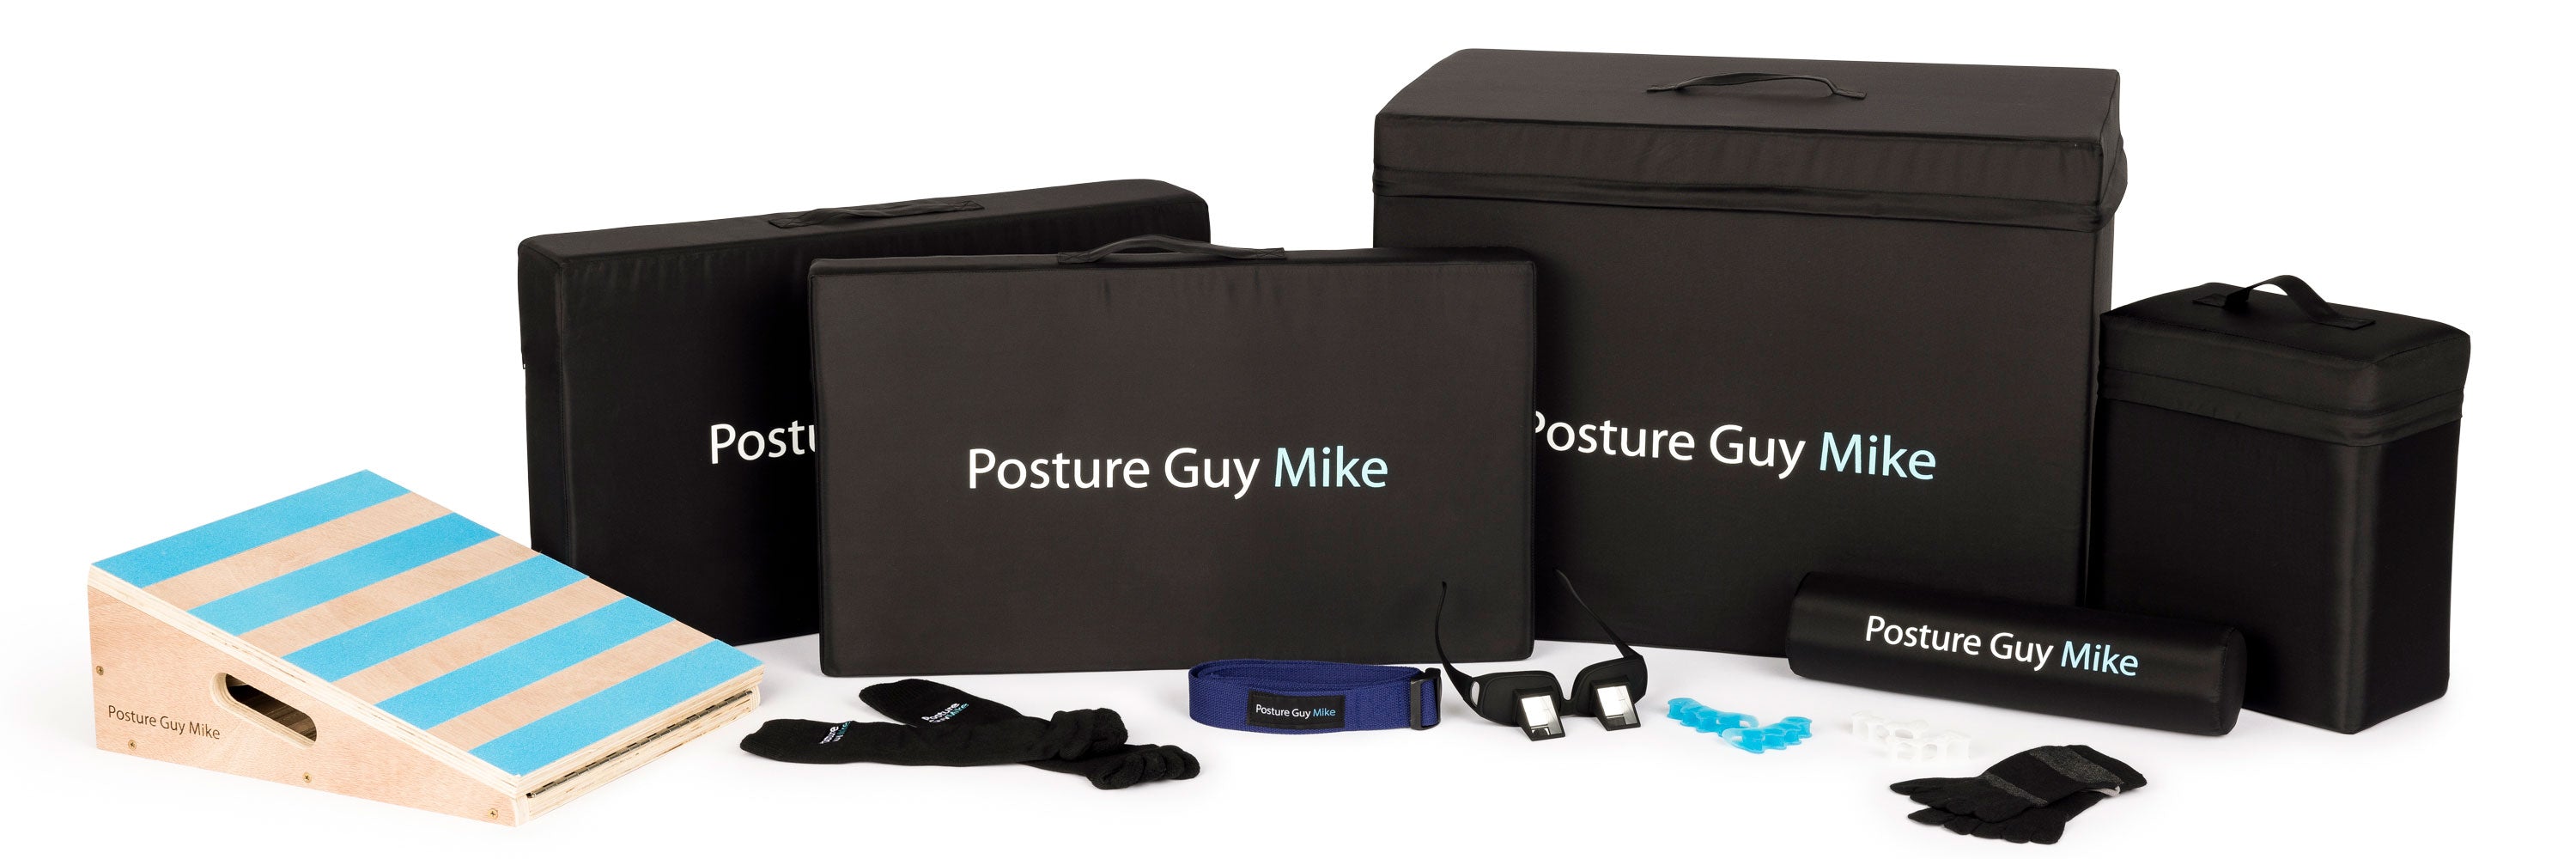 Posture Guy Mike Foam Riser for Large Posture Block Egoscue Yoga